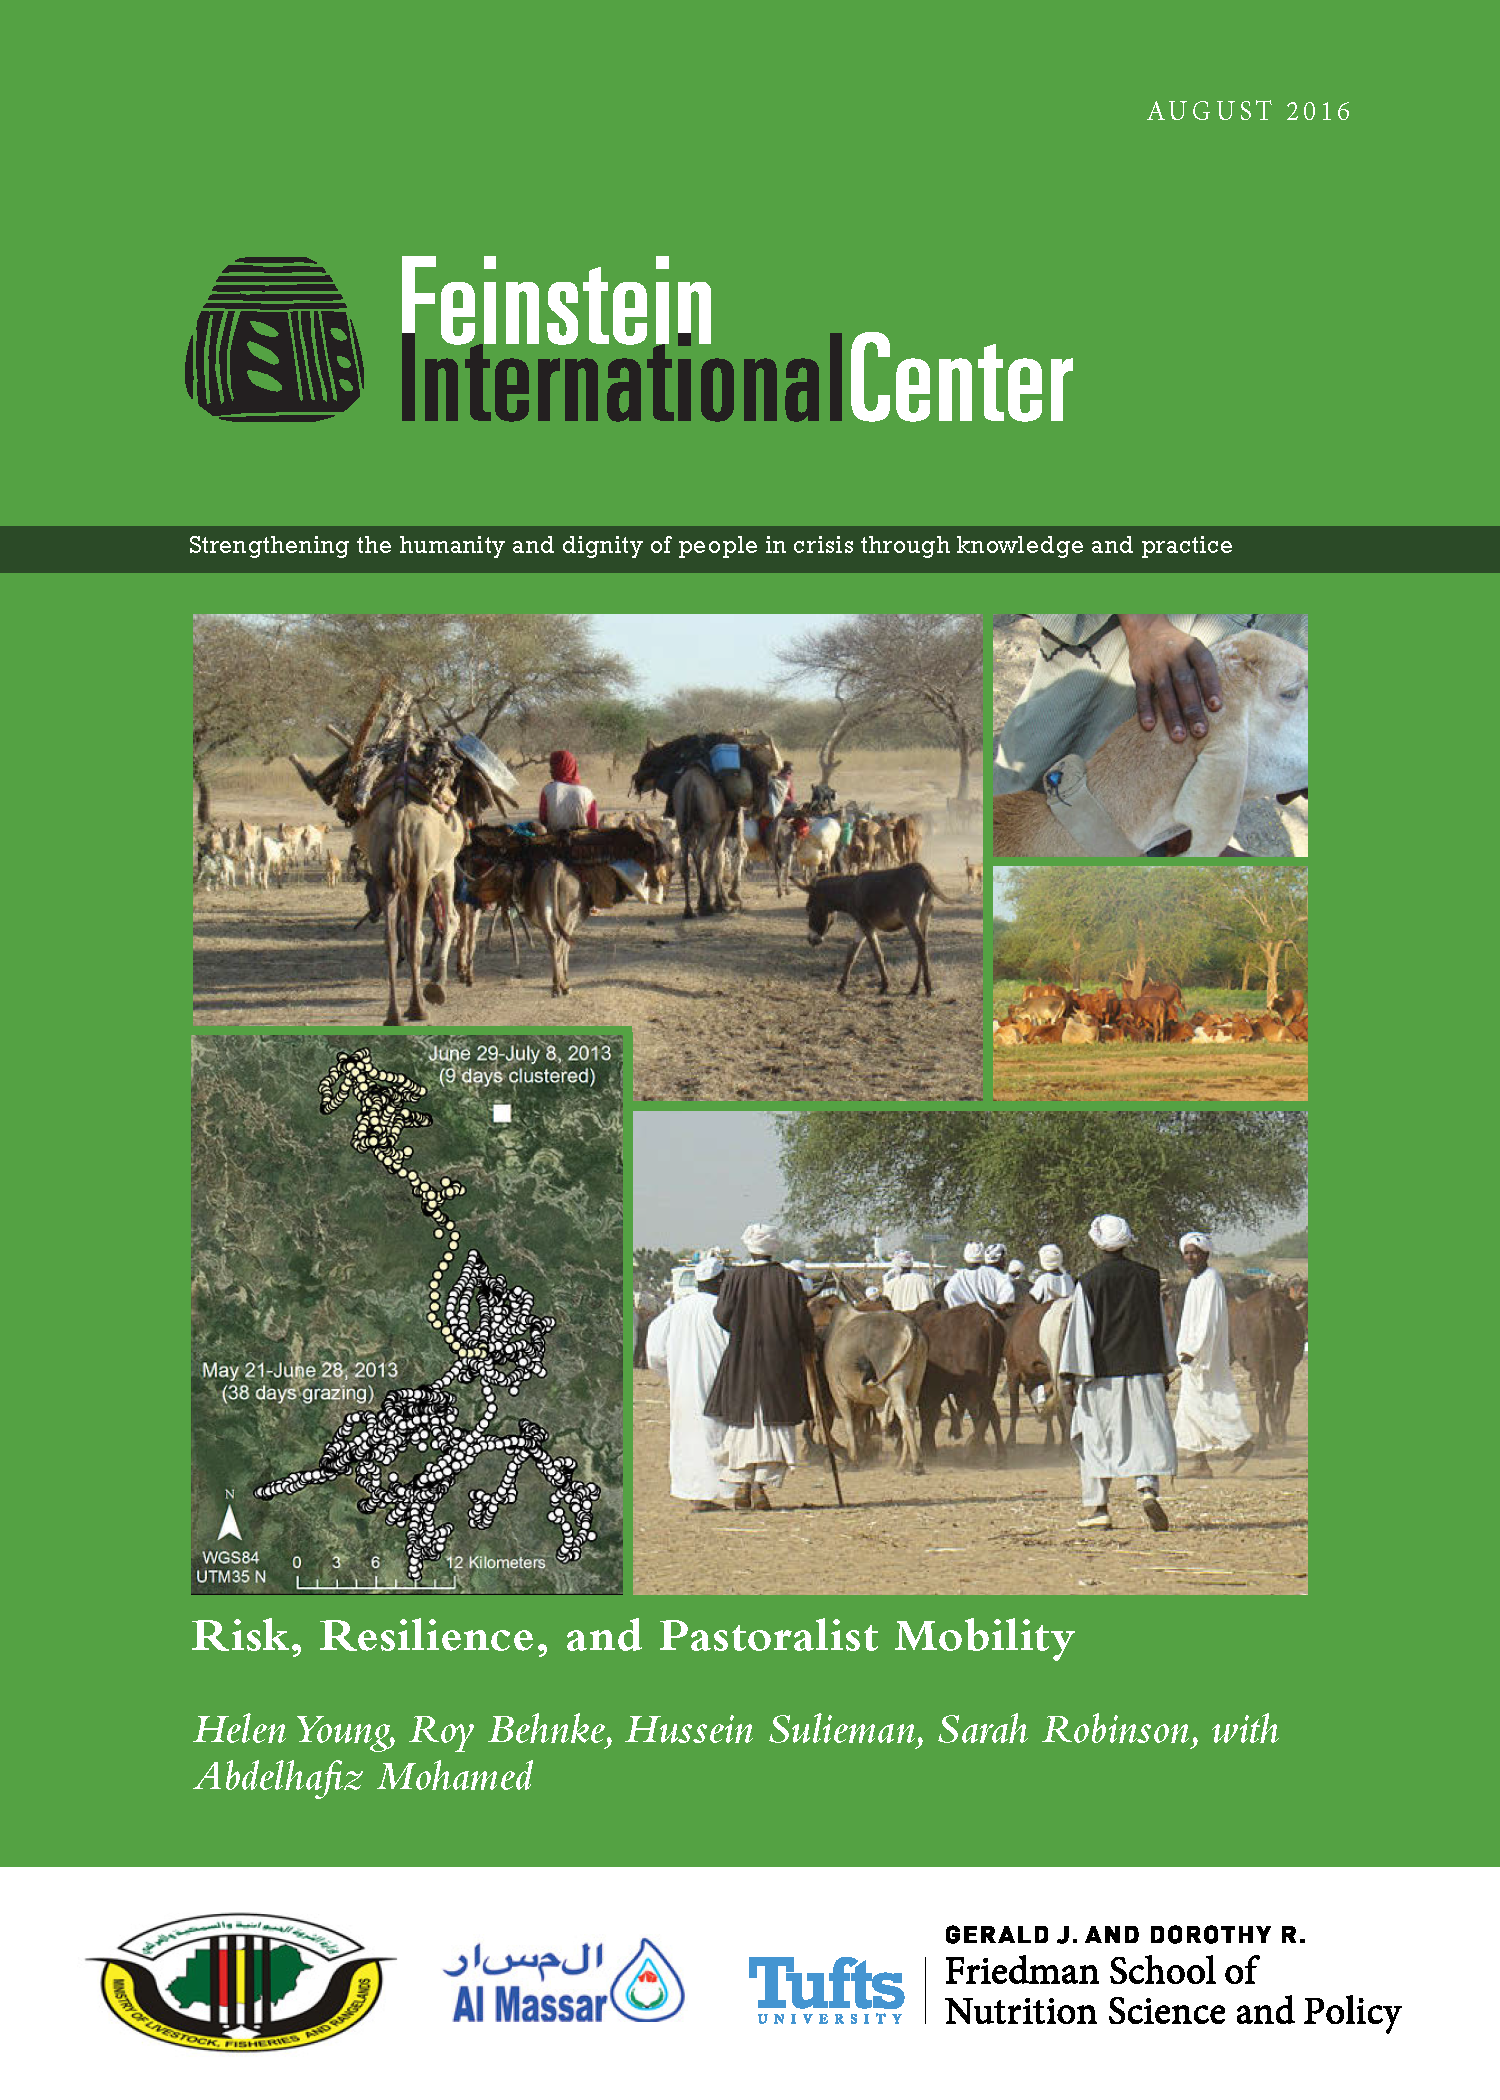 pastoralist mobility